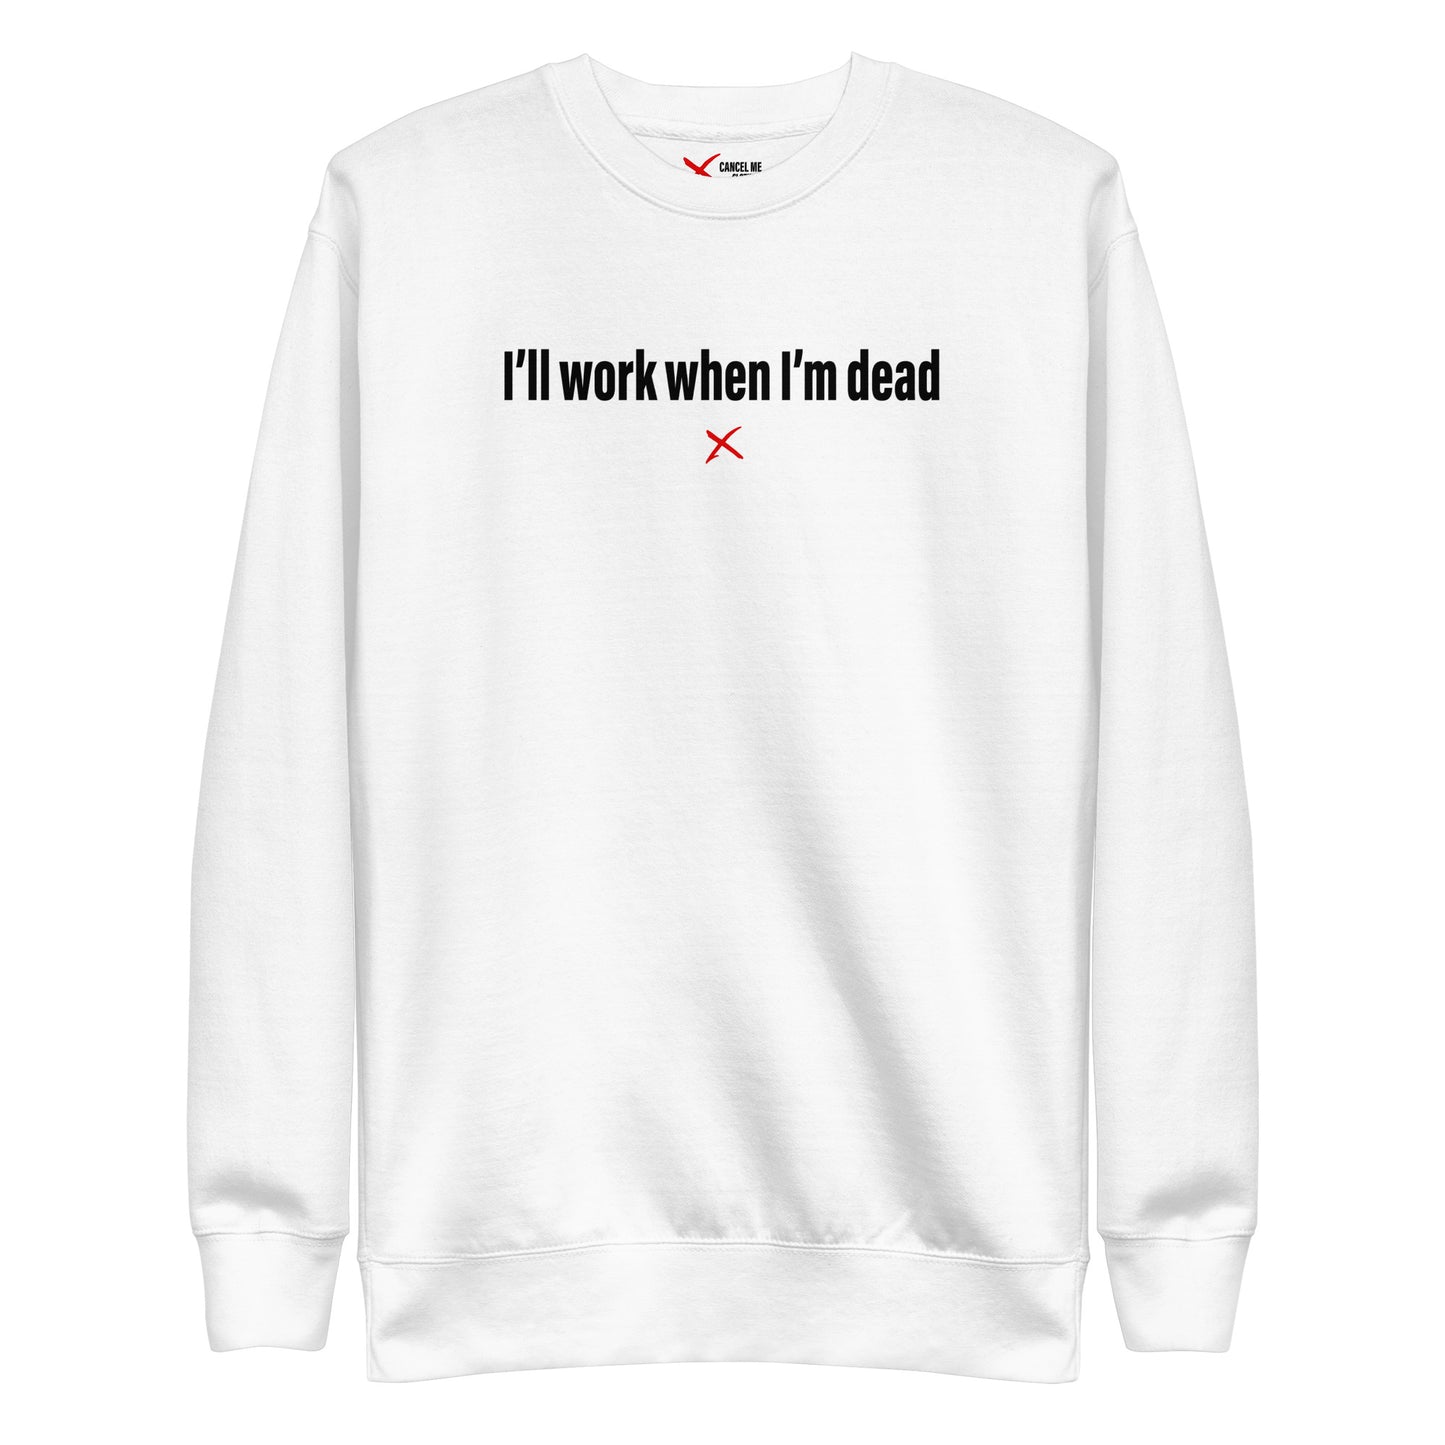 I'll work when I'm dead - Sweatshirt